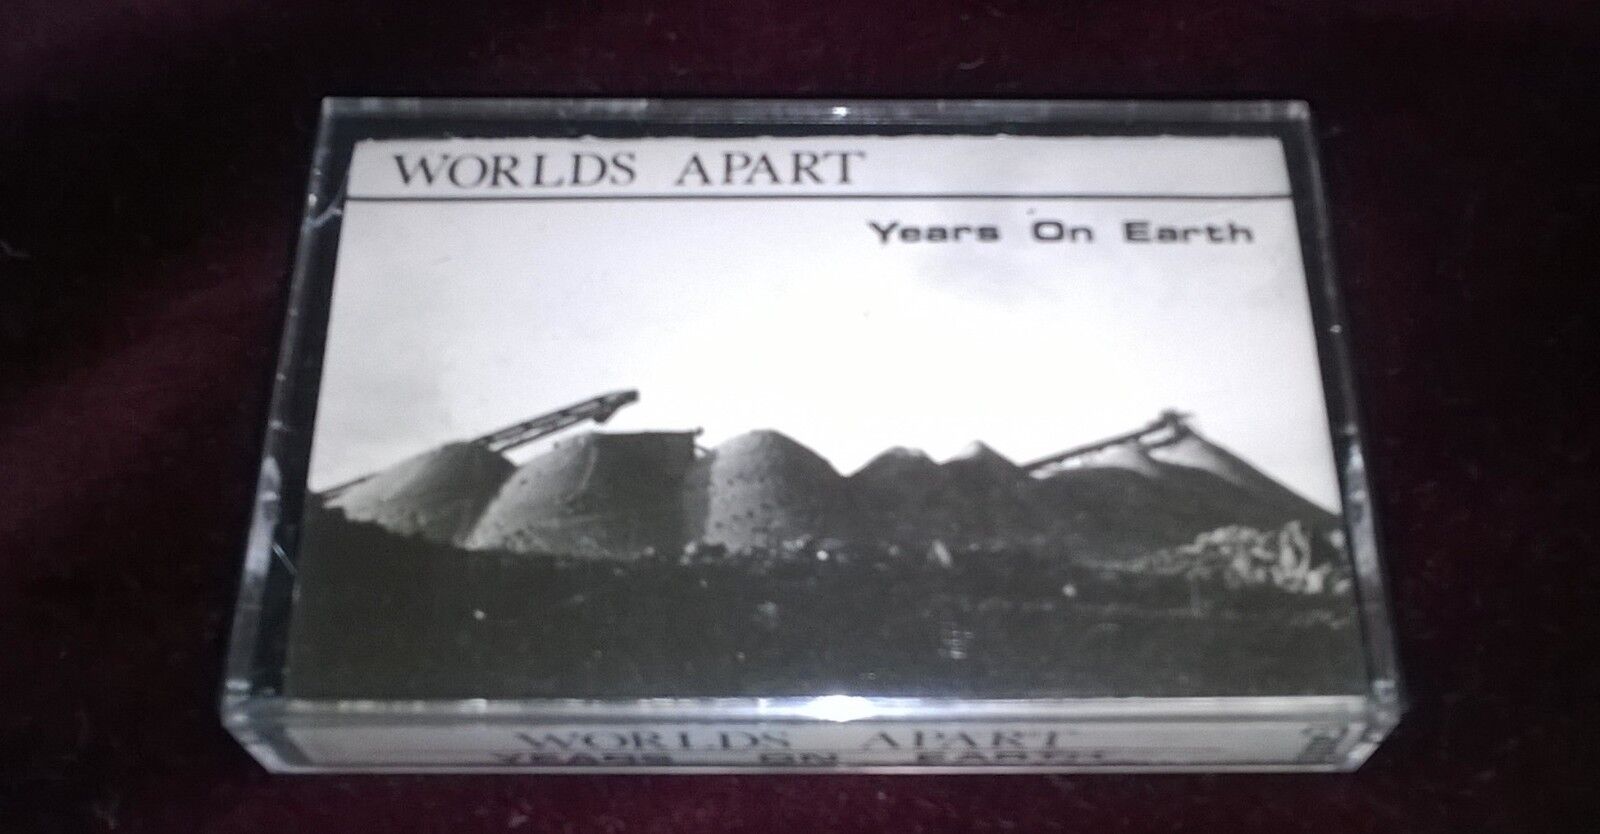 Years On Earth Worlds Apart Cassette Tape Calypso Now YOE-34 Switzerland RARE !!